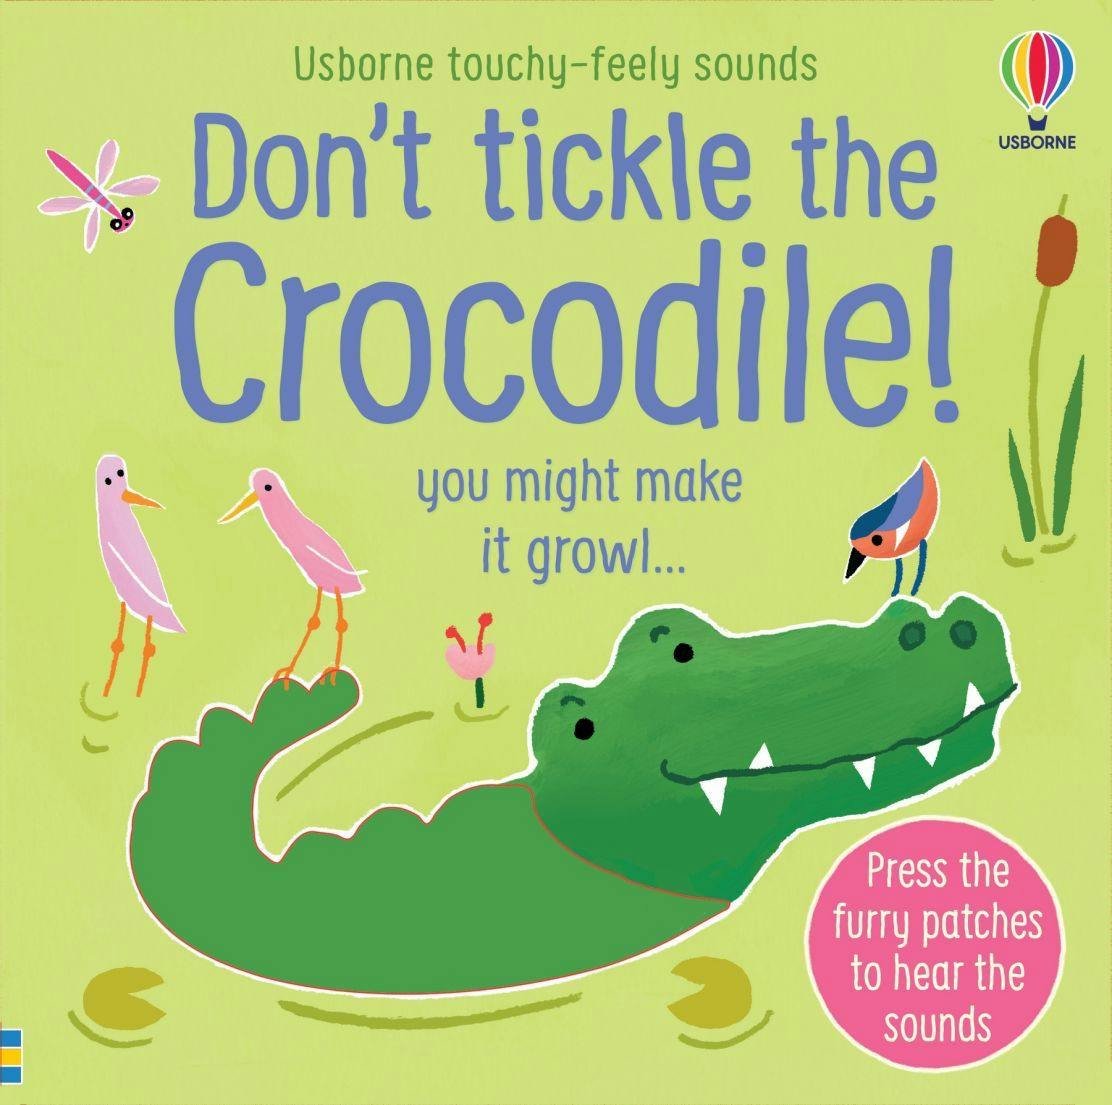 Usborne Don't Tickle the Crocodile Touchy-feely Book